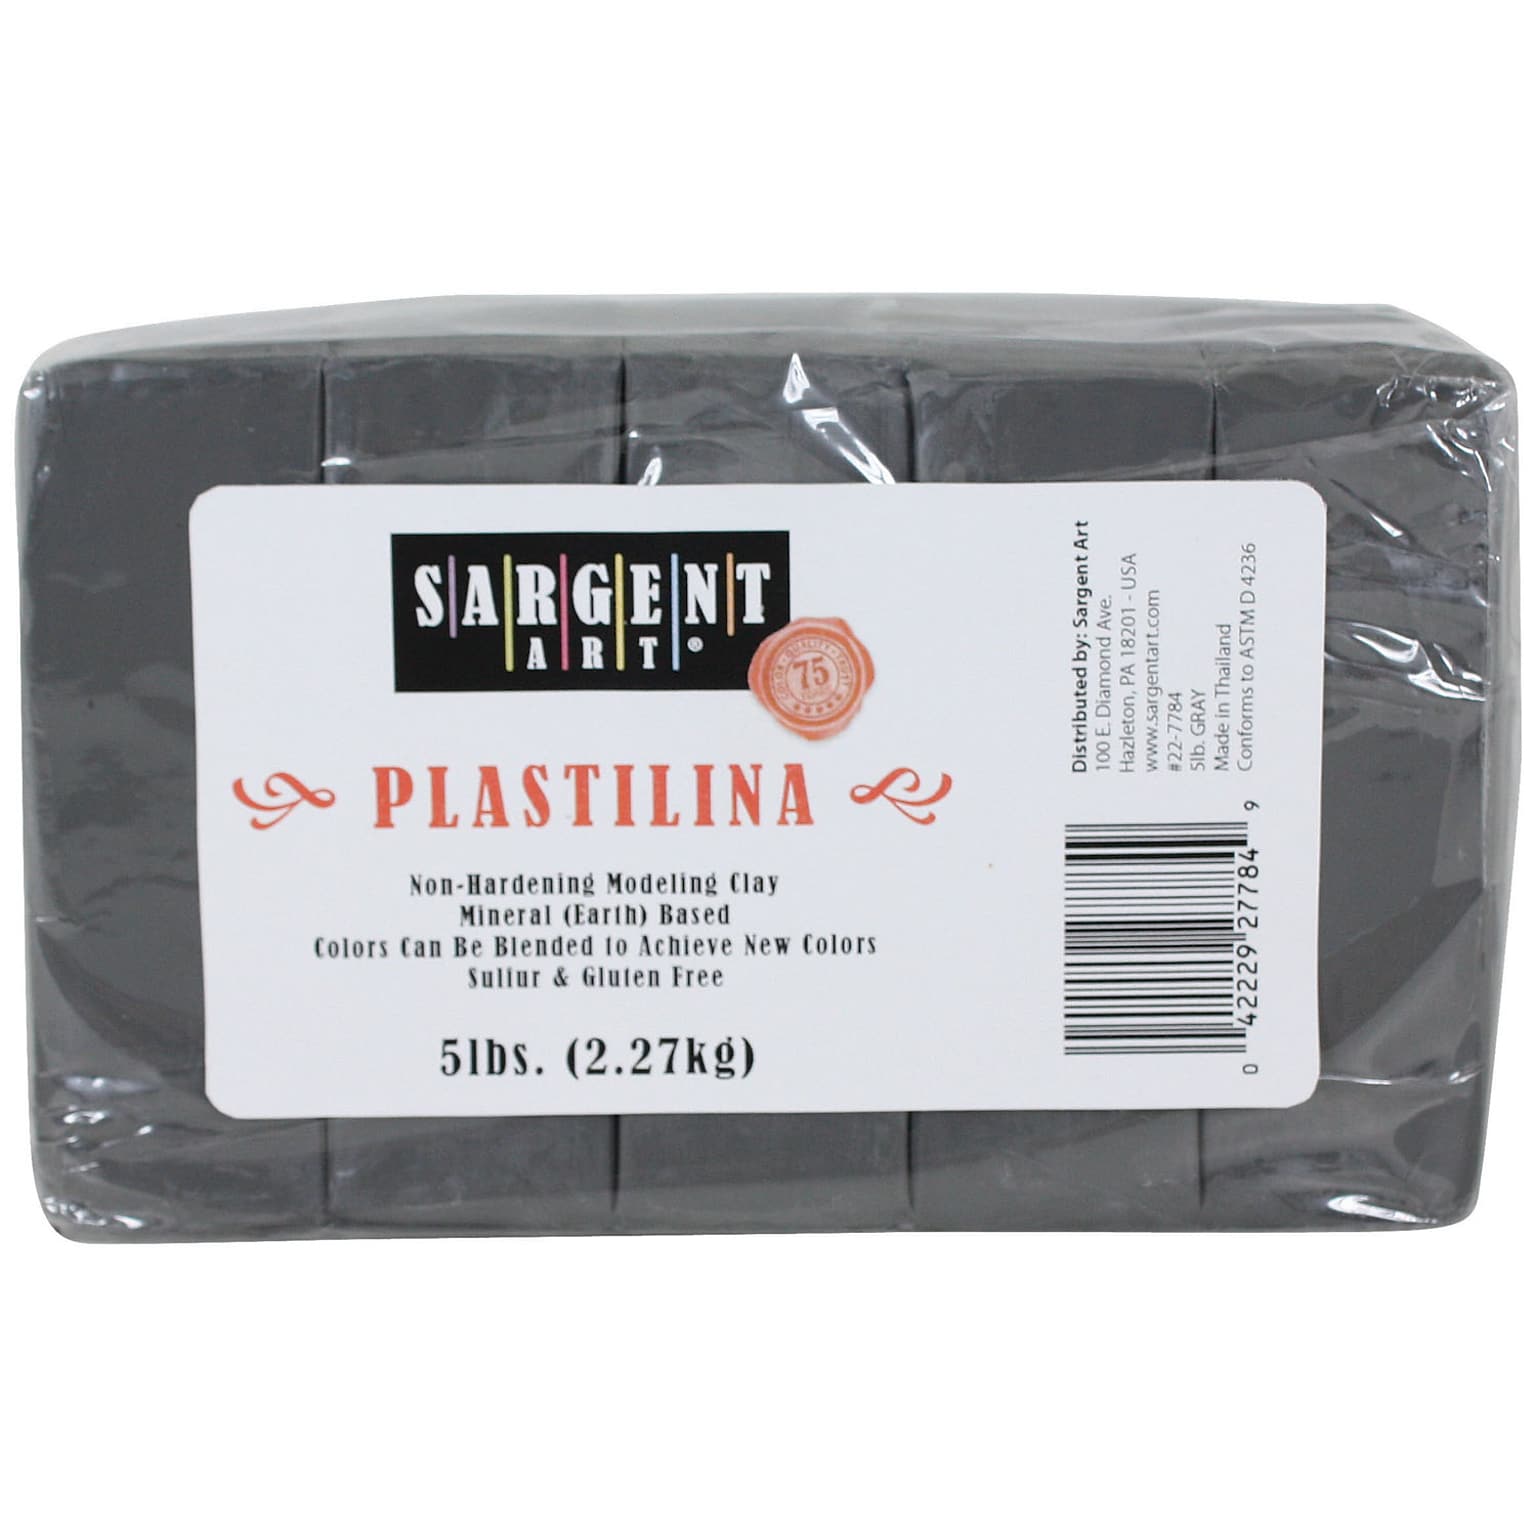 Sargent Art® Plastilina Non-Hardening Modeling Clay, Gray, 5 lbs. (SAR227784)